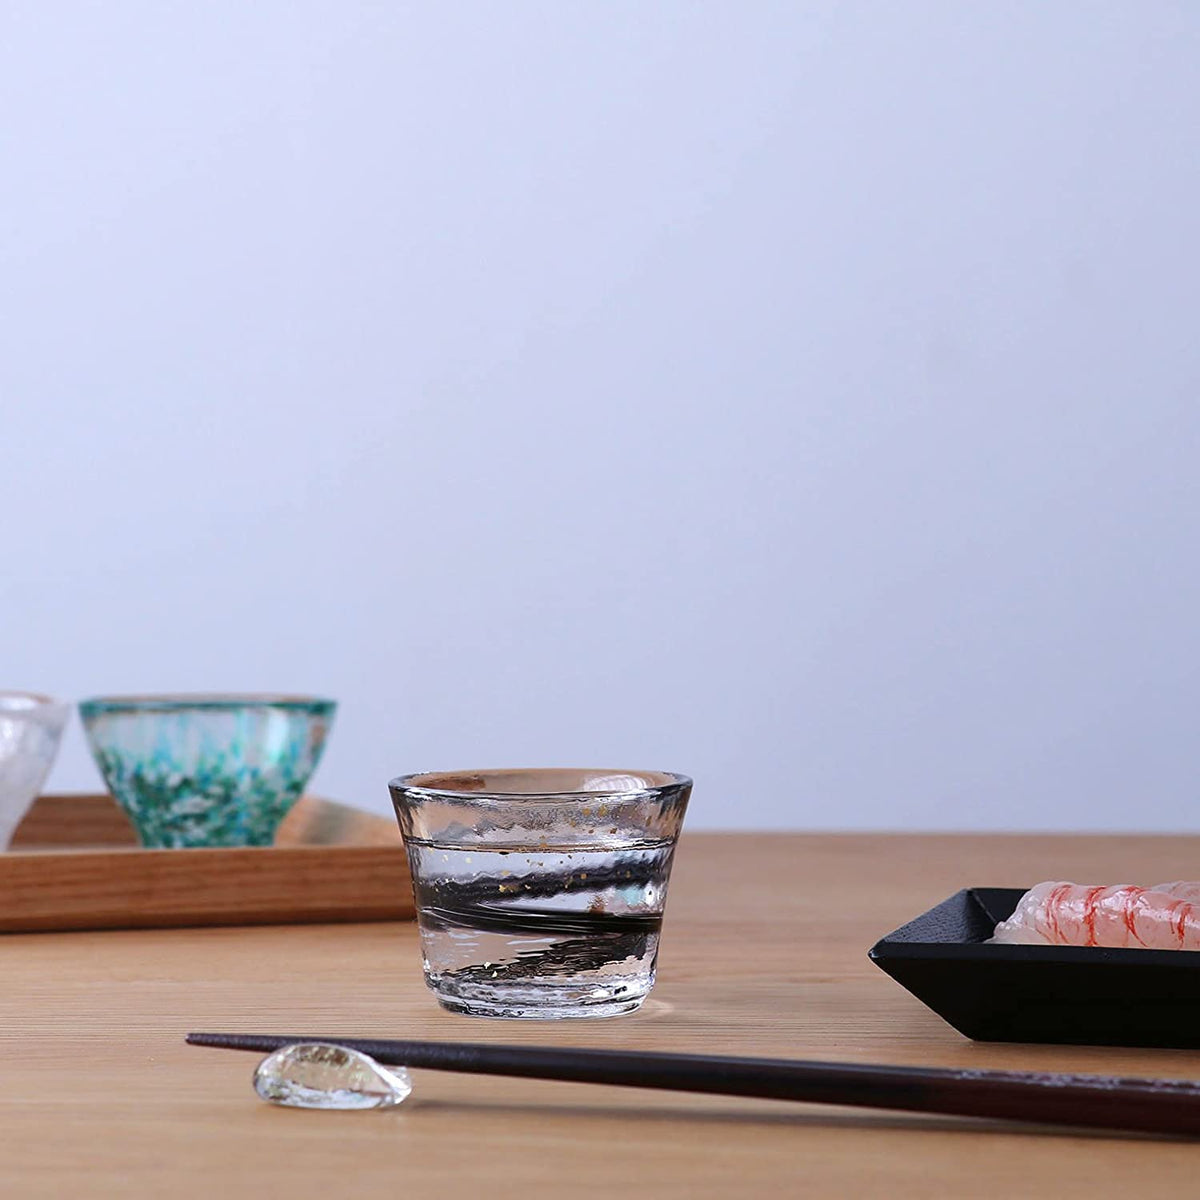 ADERIA Tsugaru Vidro Soda-Lime Glass Spring Breeze Sake Cup